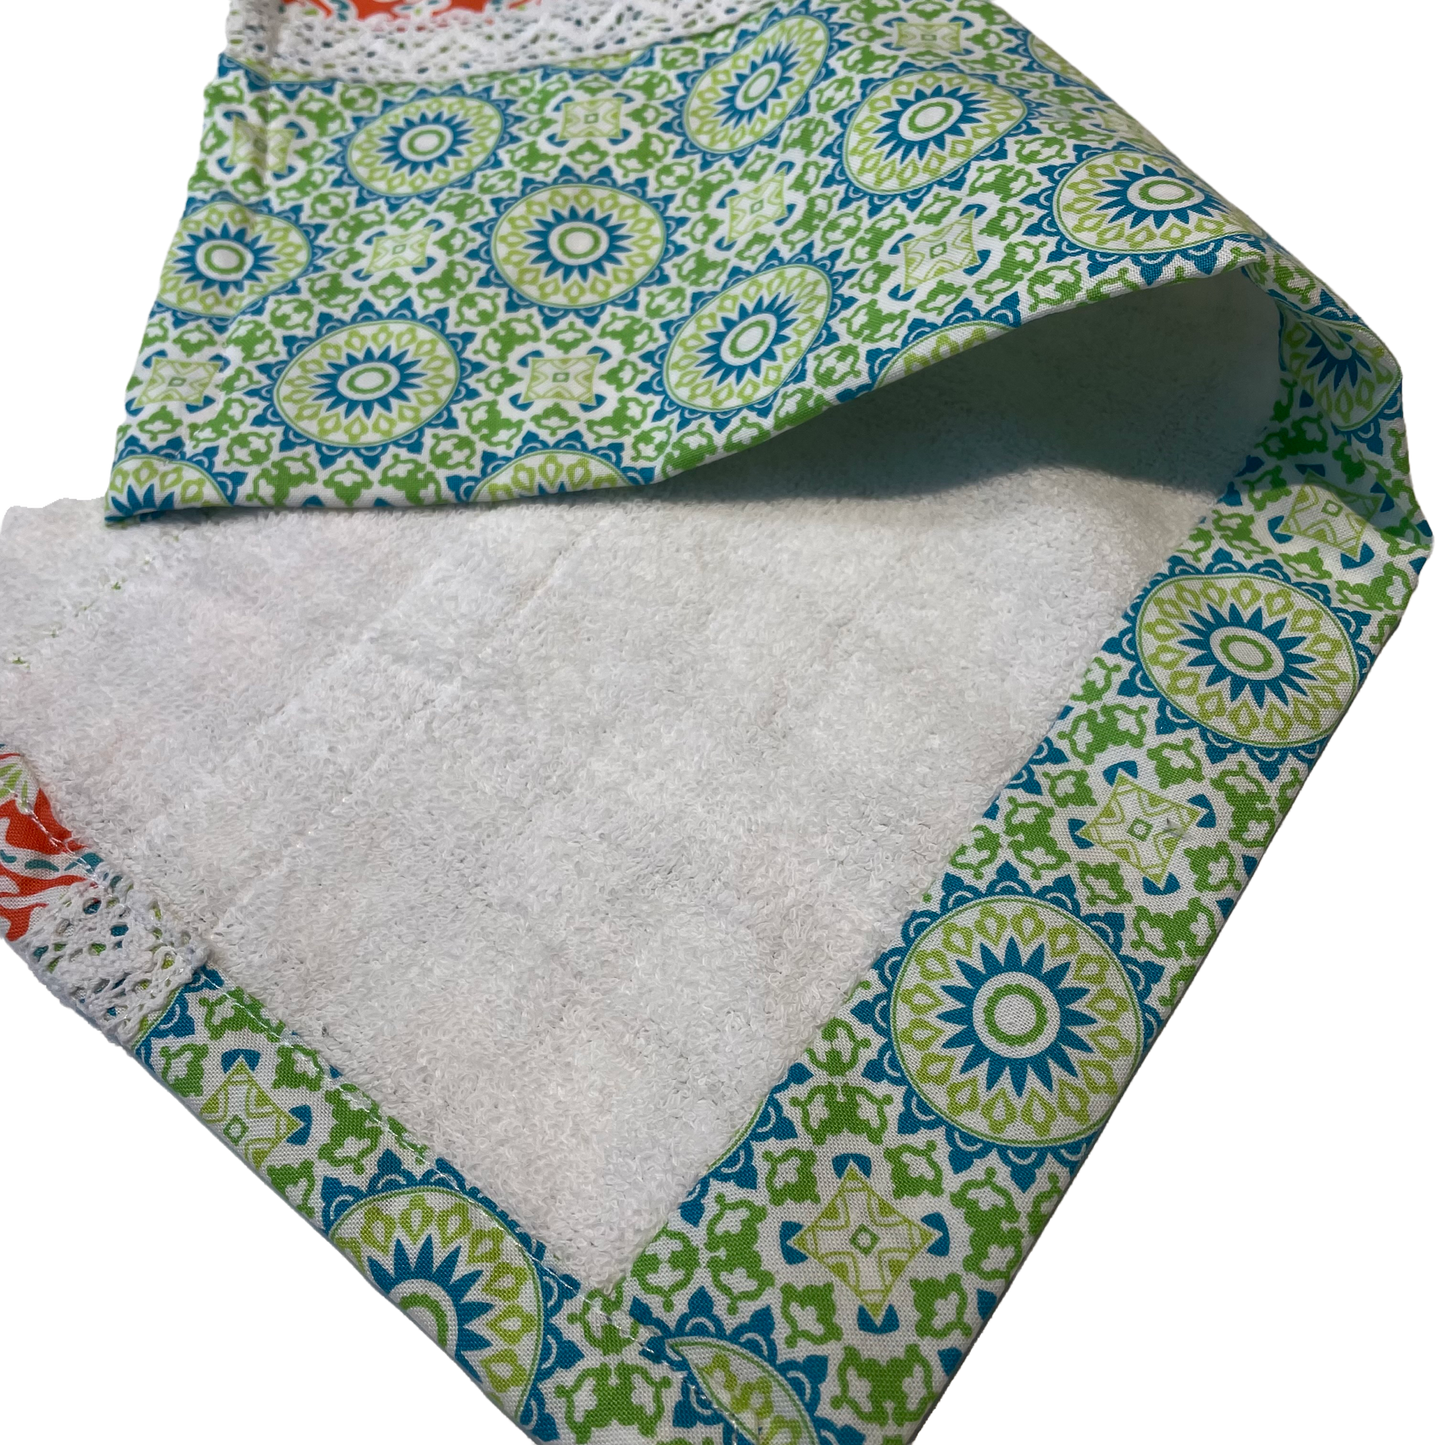 Orange and Green Dish Towel. Farmhouse style tea towel. - Home Stitchery Decor